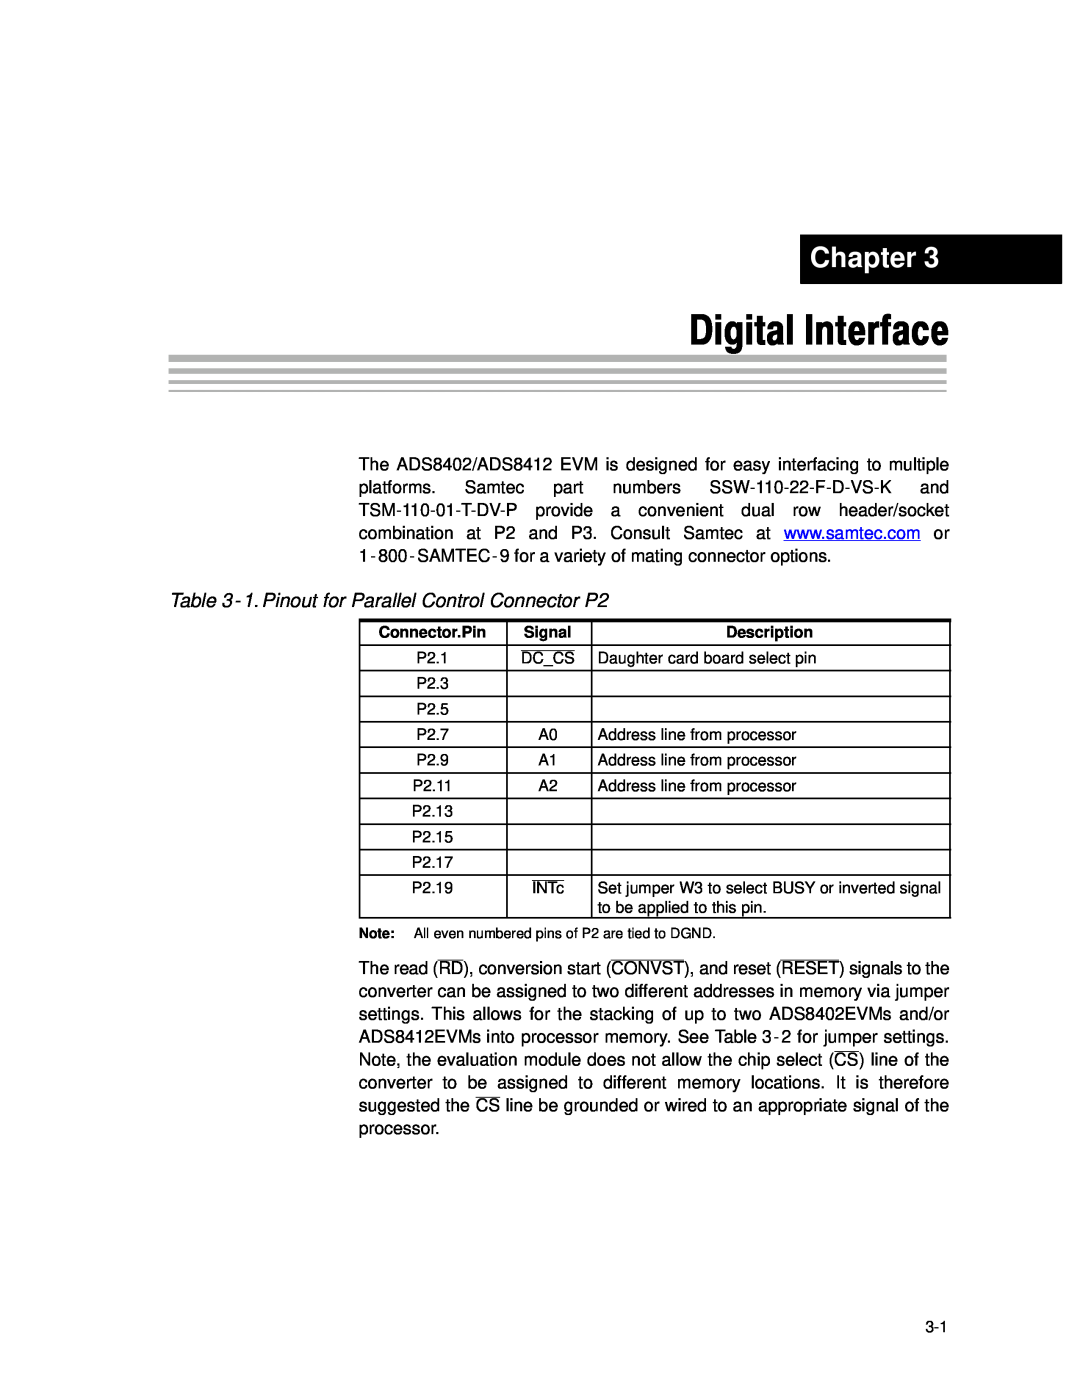 Texas Instruments ADS8402 EVM, ADS8412 EVM manual Digital Interface, Chapter, Connector.Pin, Signal, Description 